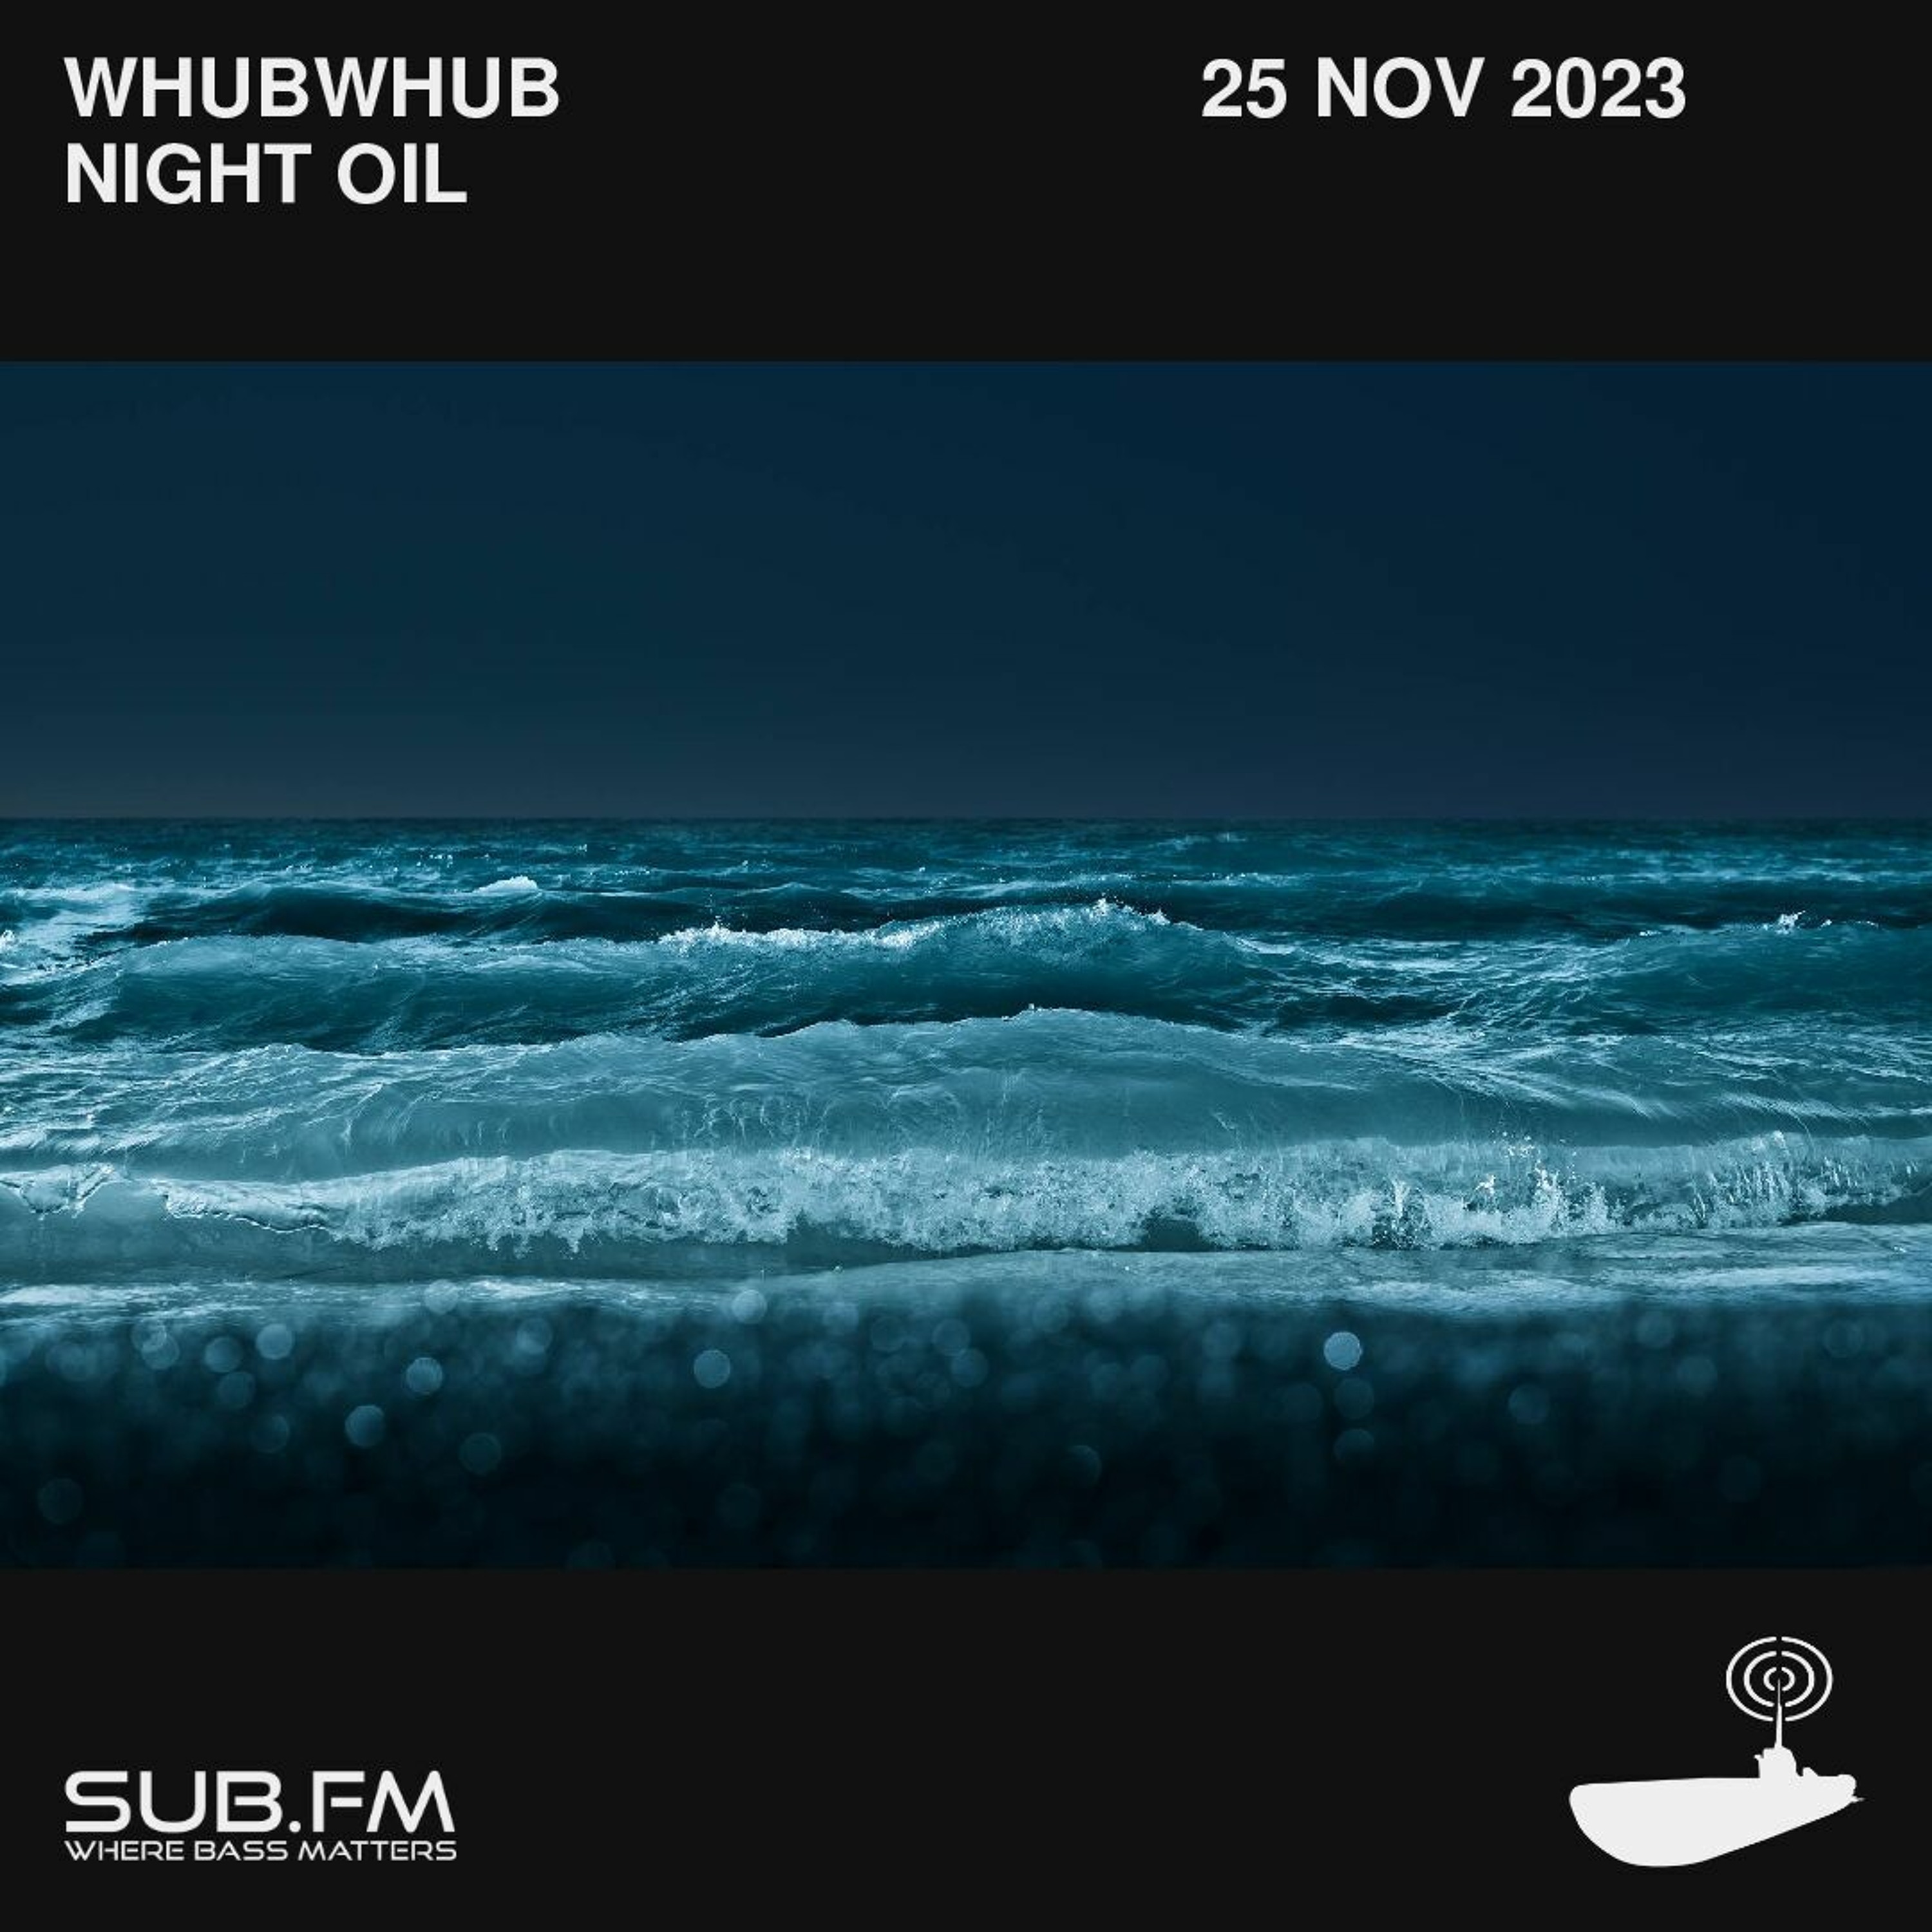 Whubwhub Night Oil - 25 Nov 2023